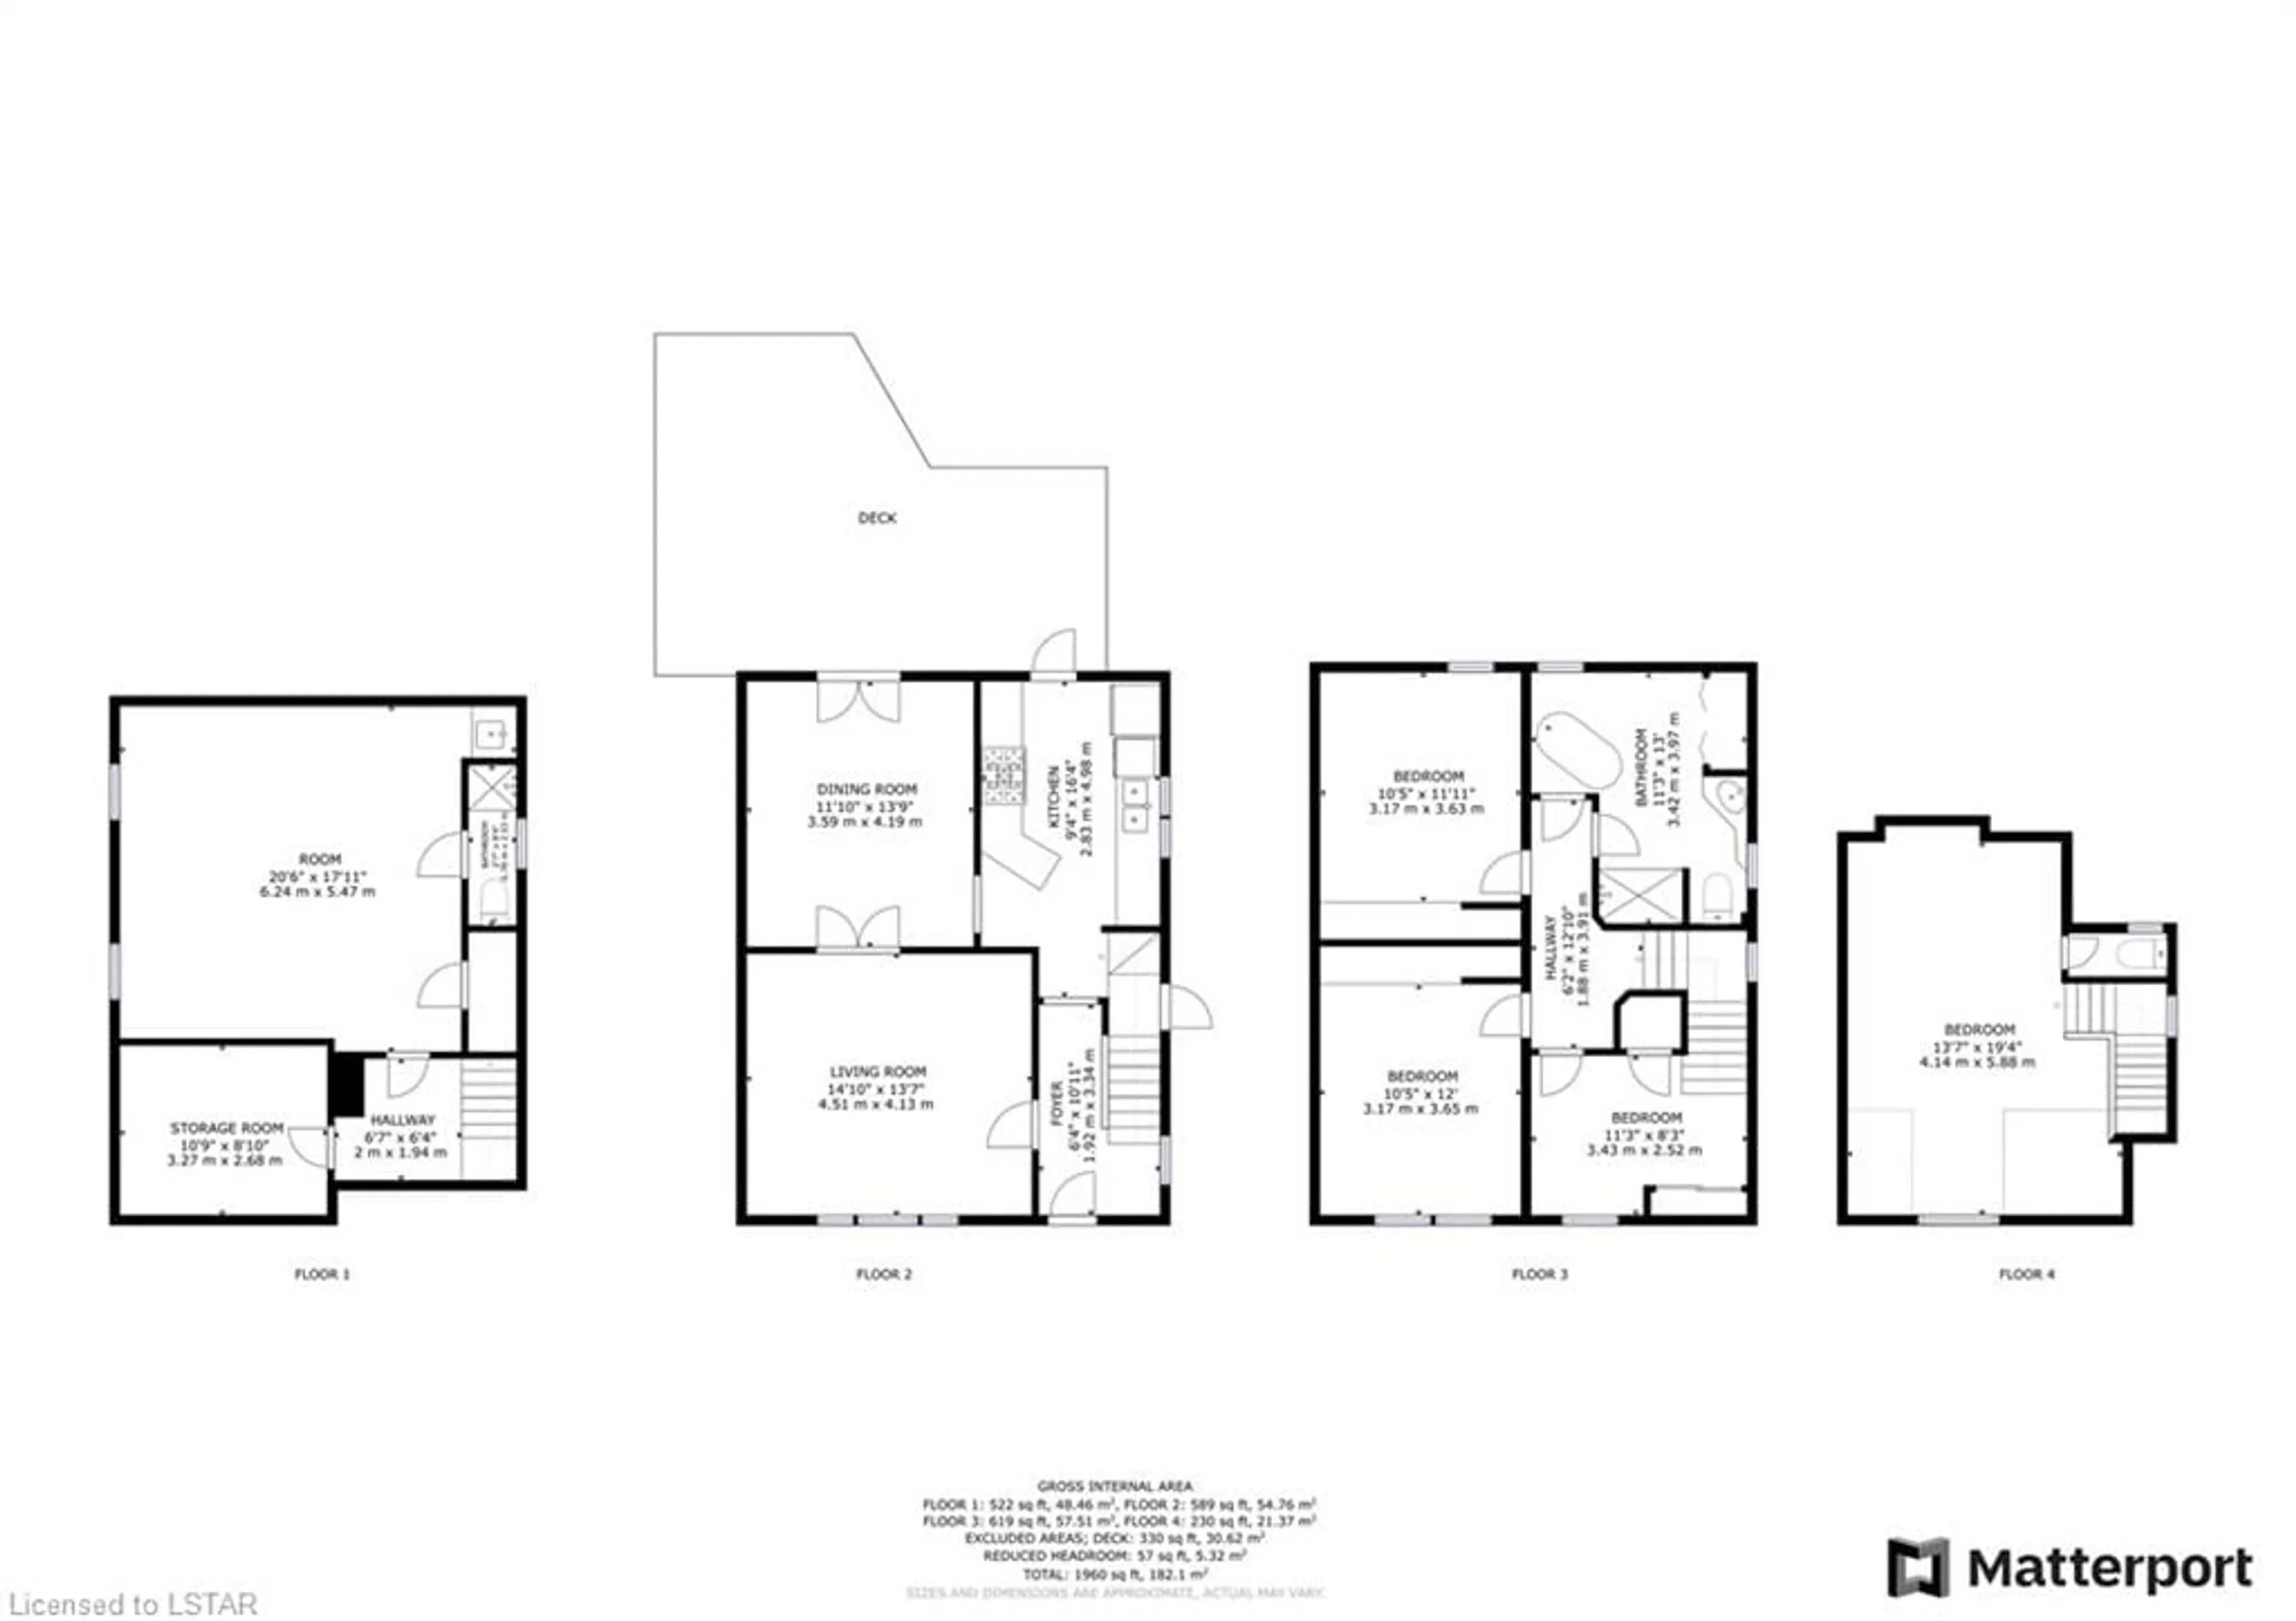 Floor plan for 839 Dufferin Ave, London Ontario N5W 3J9